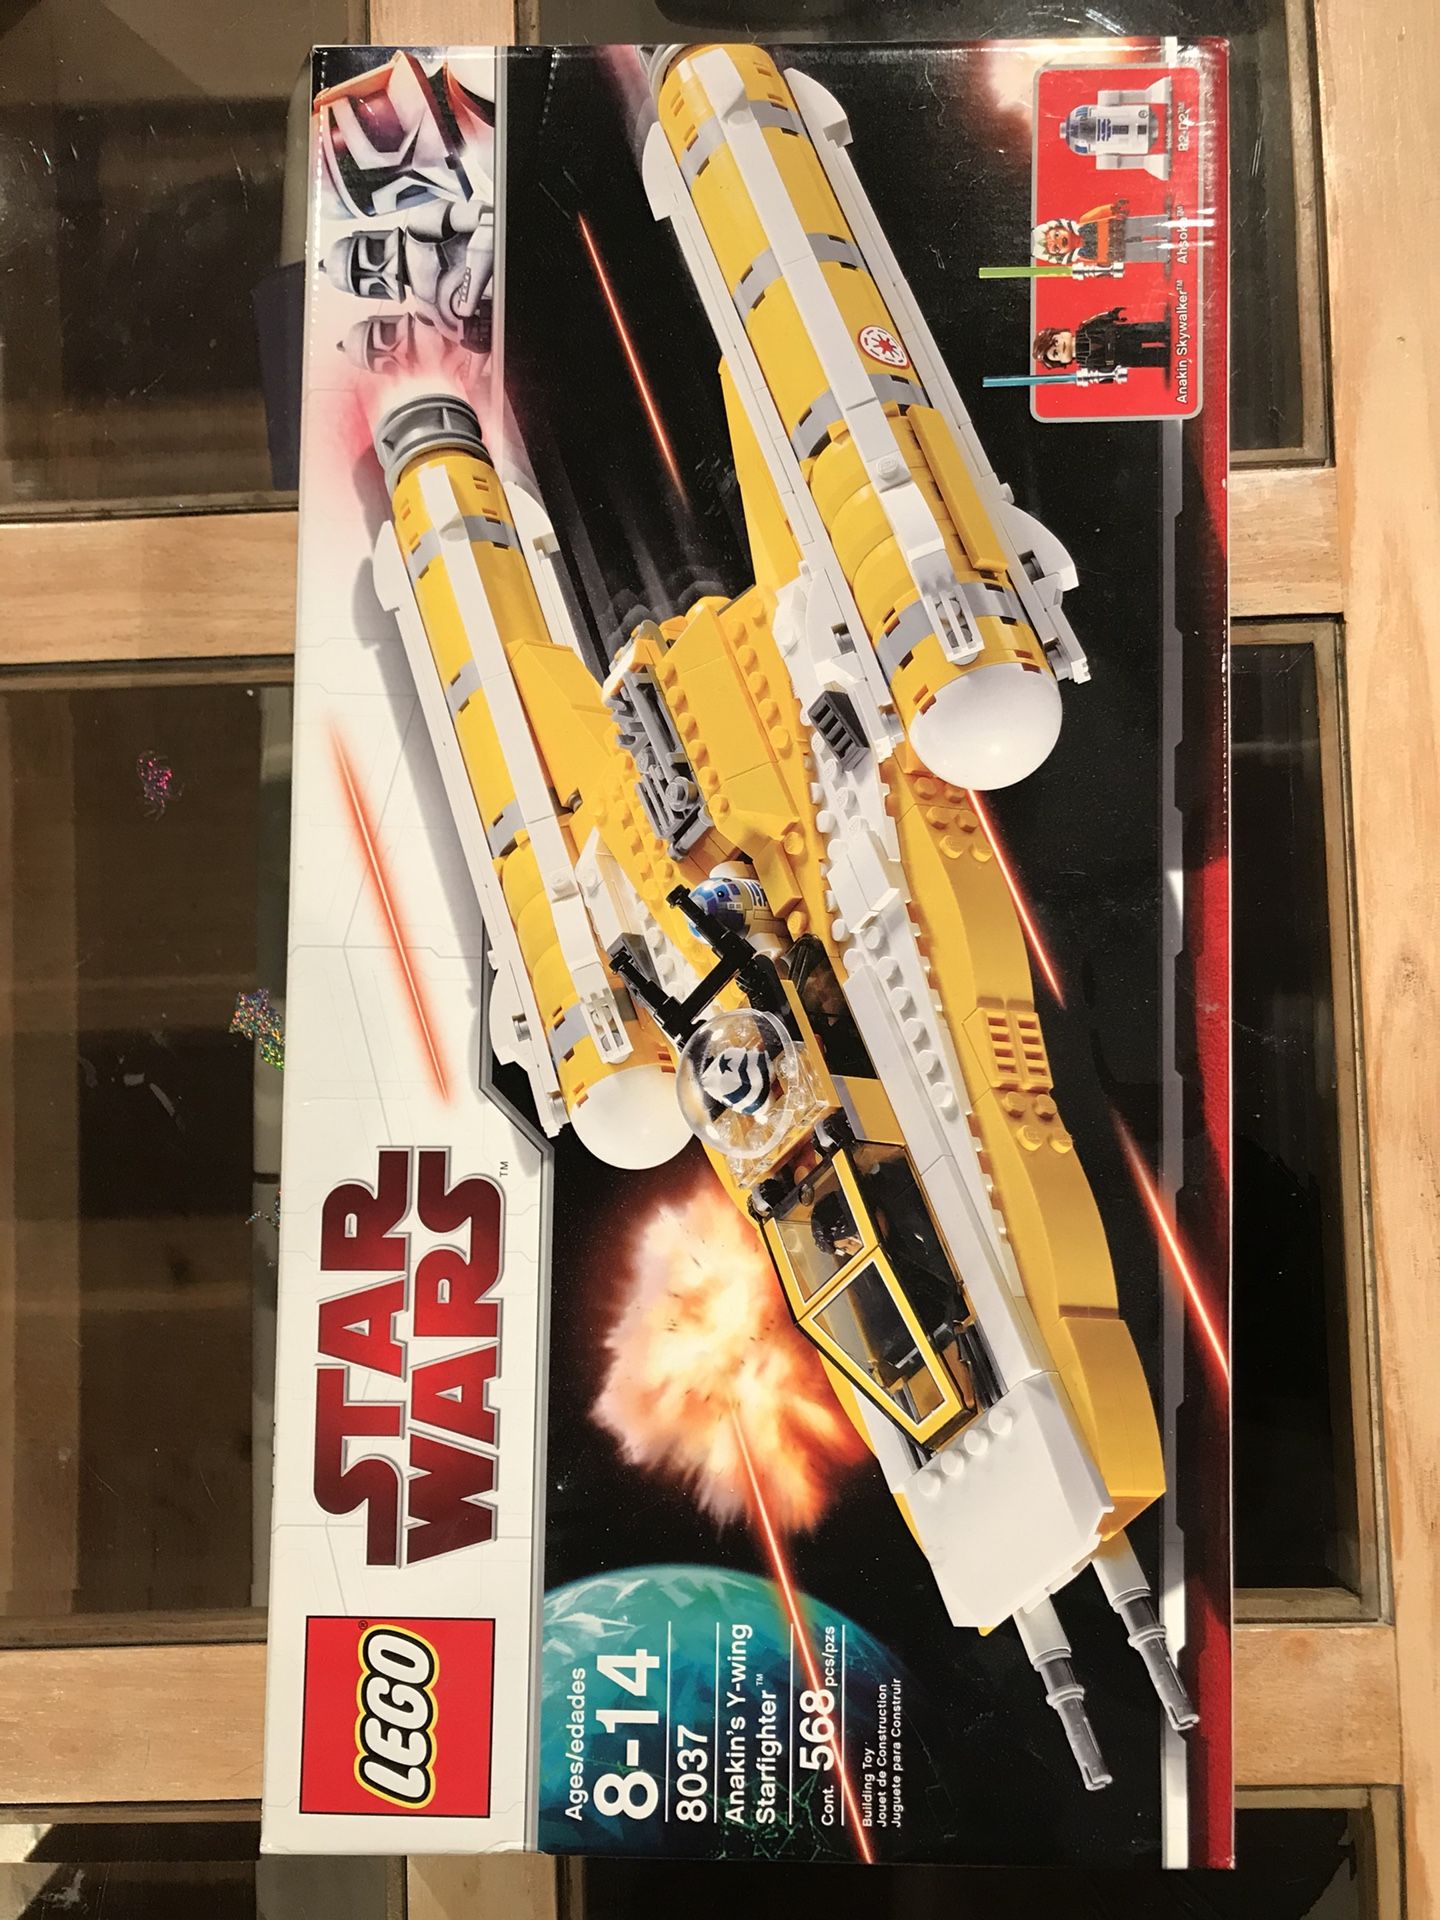 Unopened Star Wars LEGO set